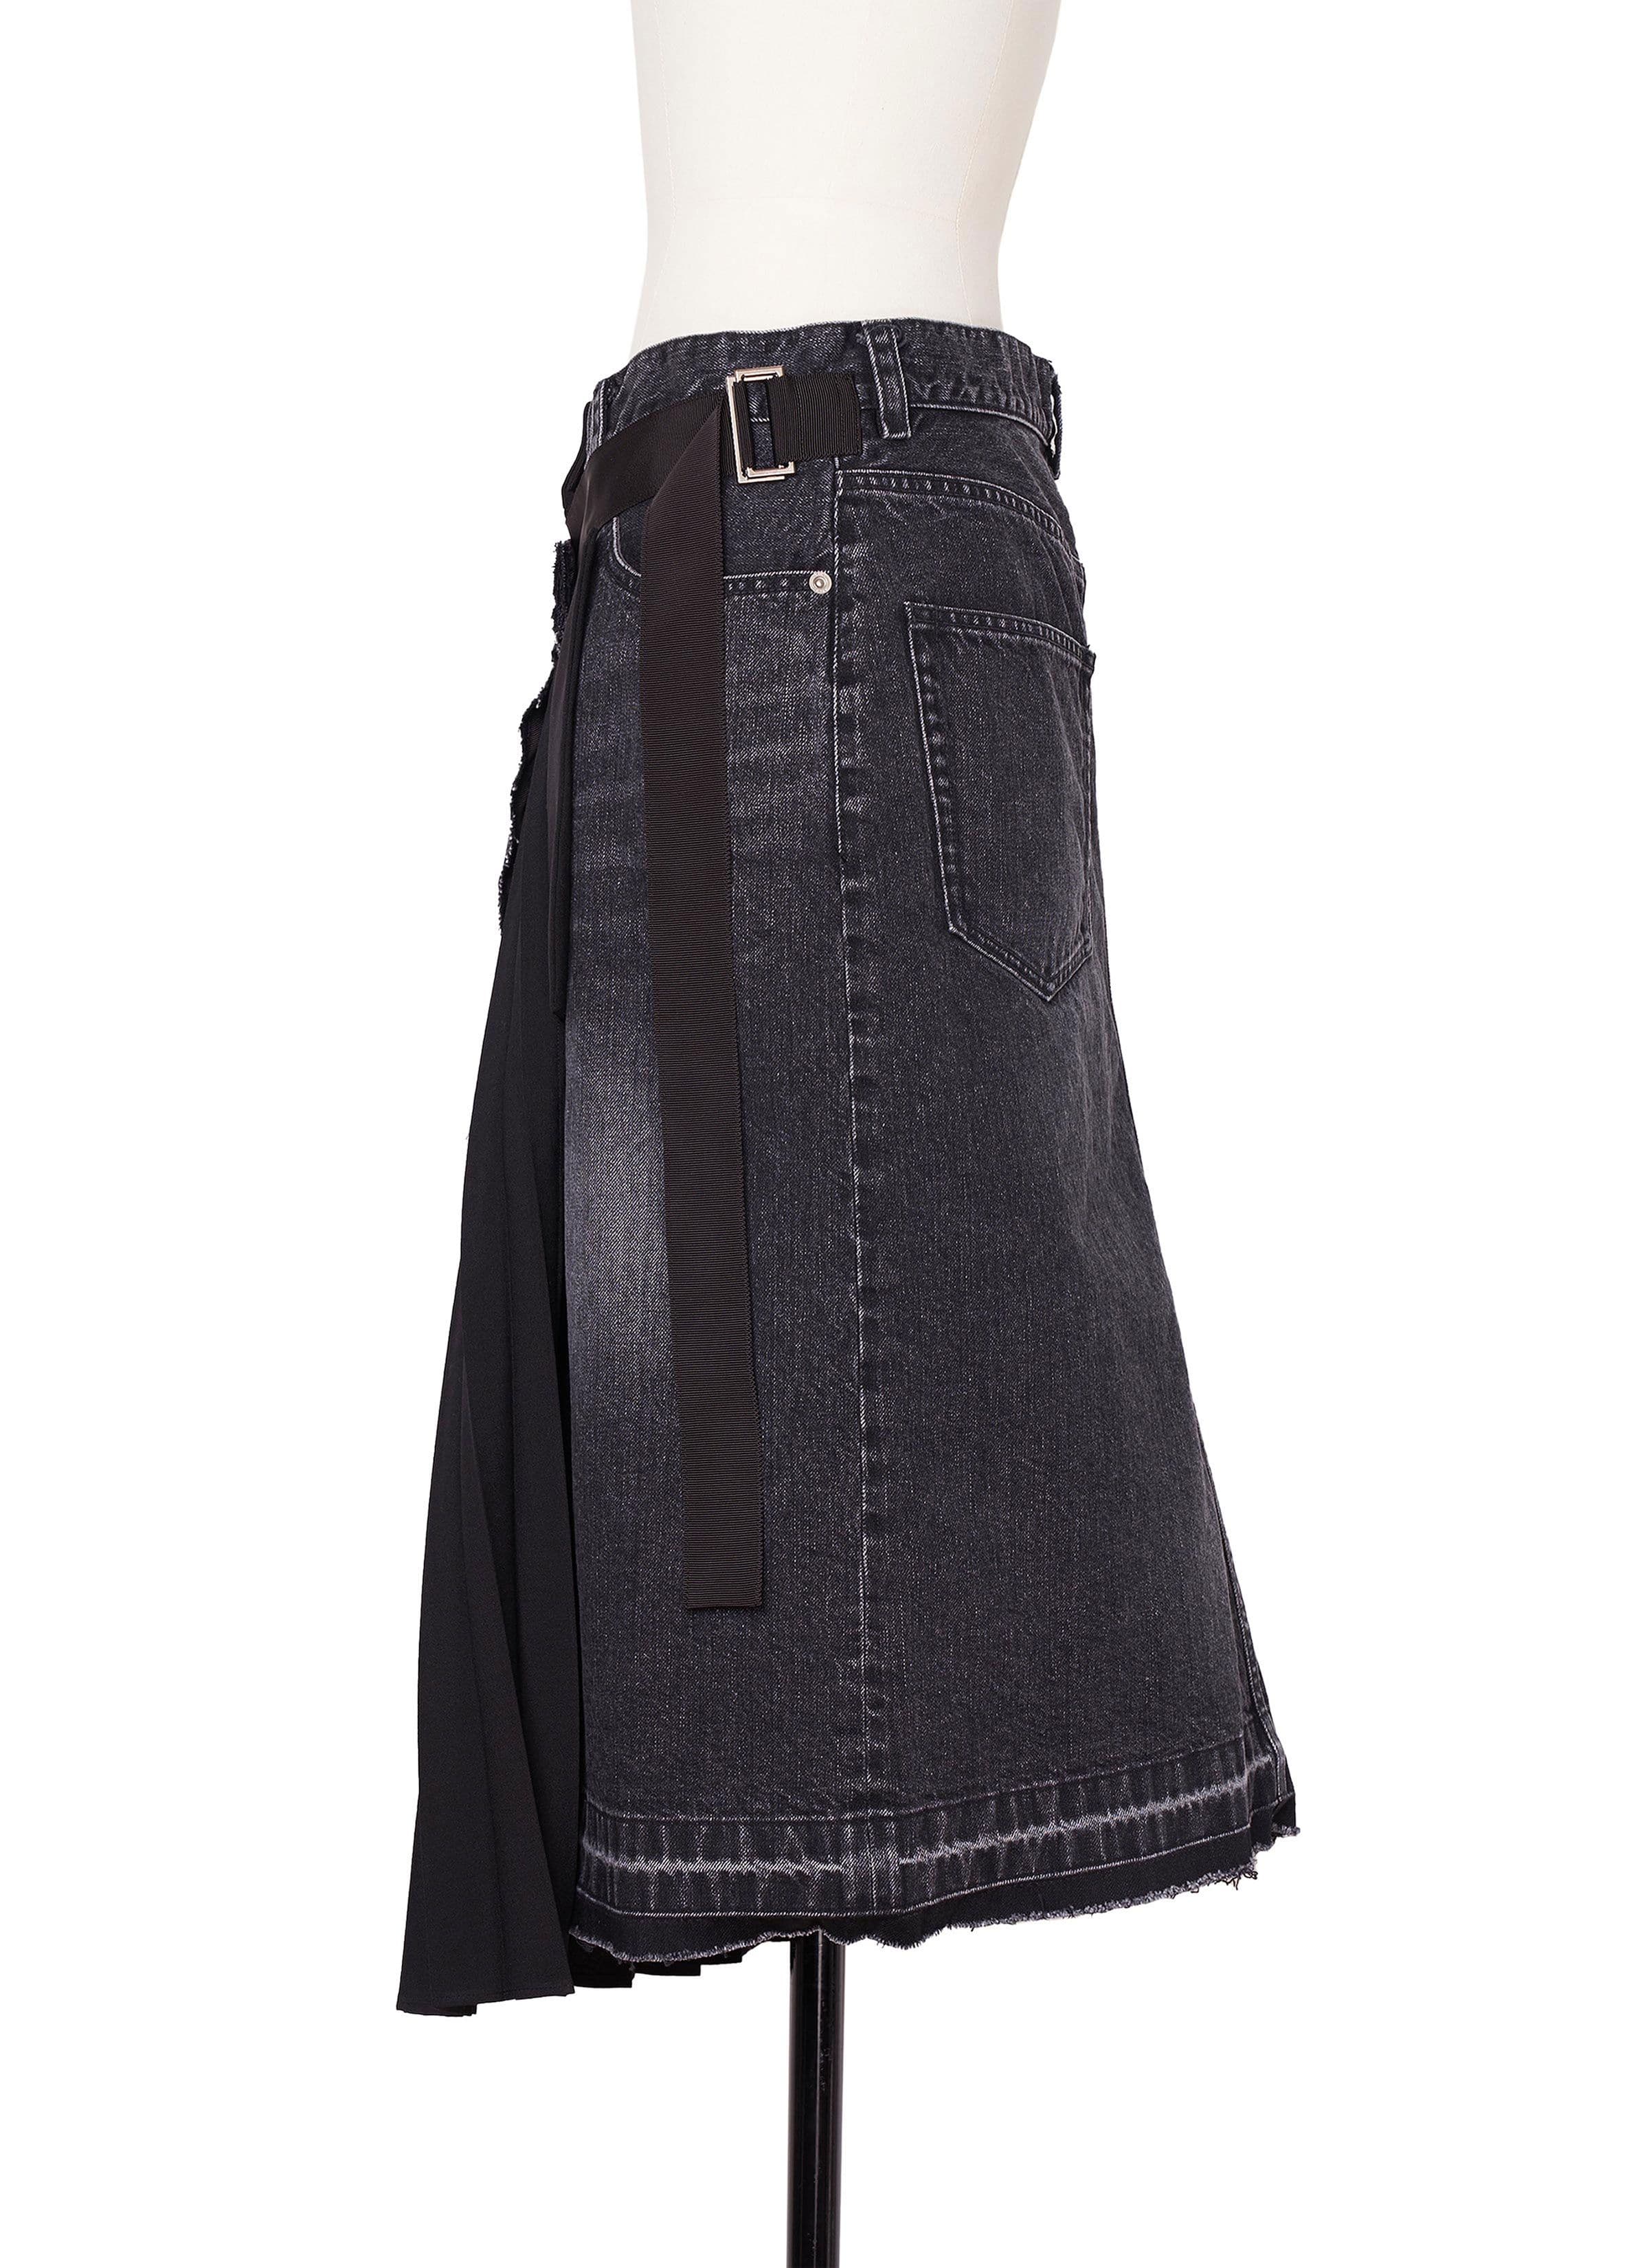 Denim x Suiting Skirt 詳細画像 BLACK 2